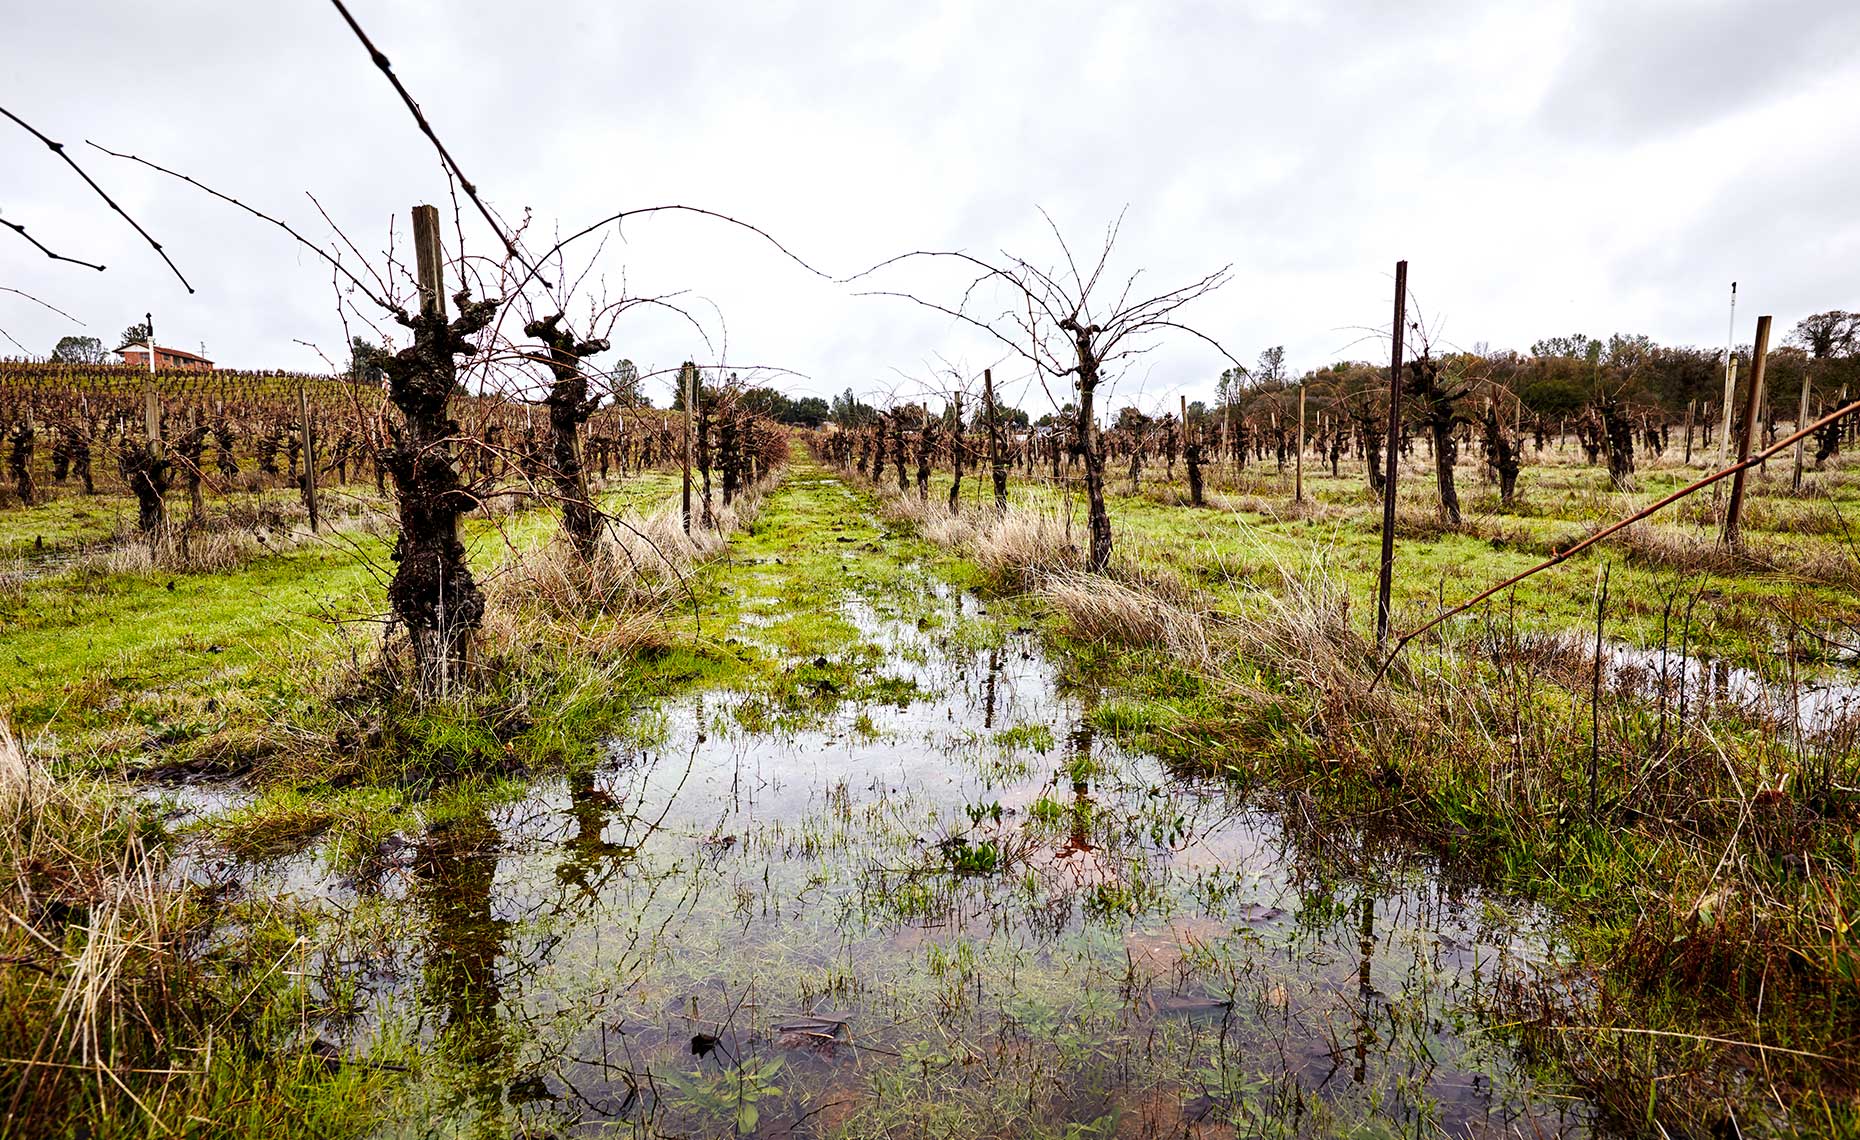 Rain in the vineyard